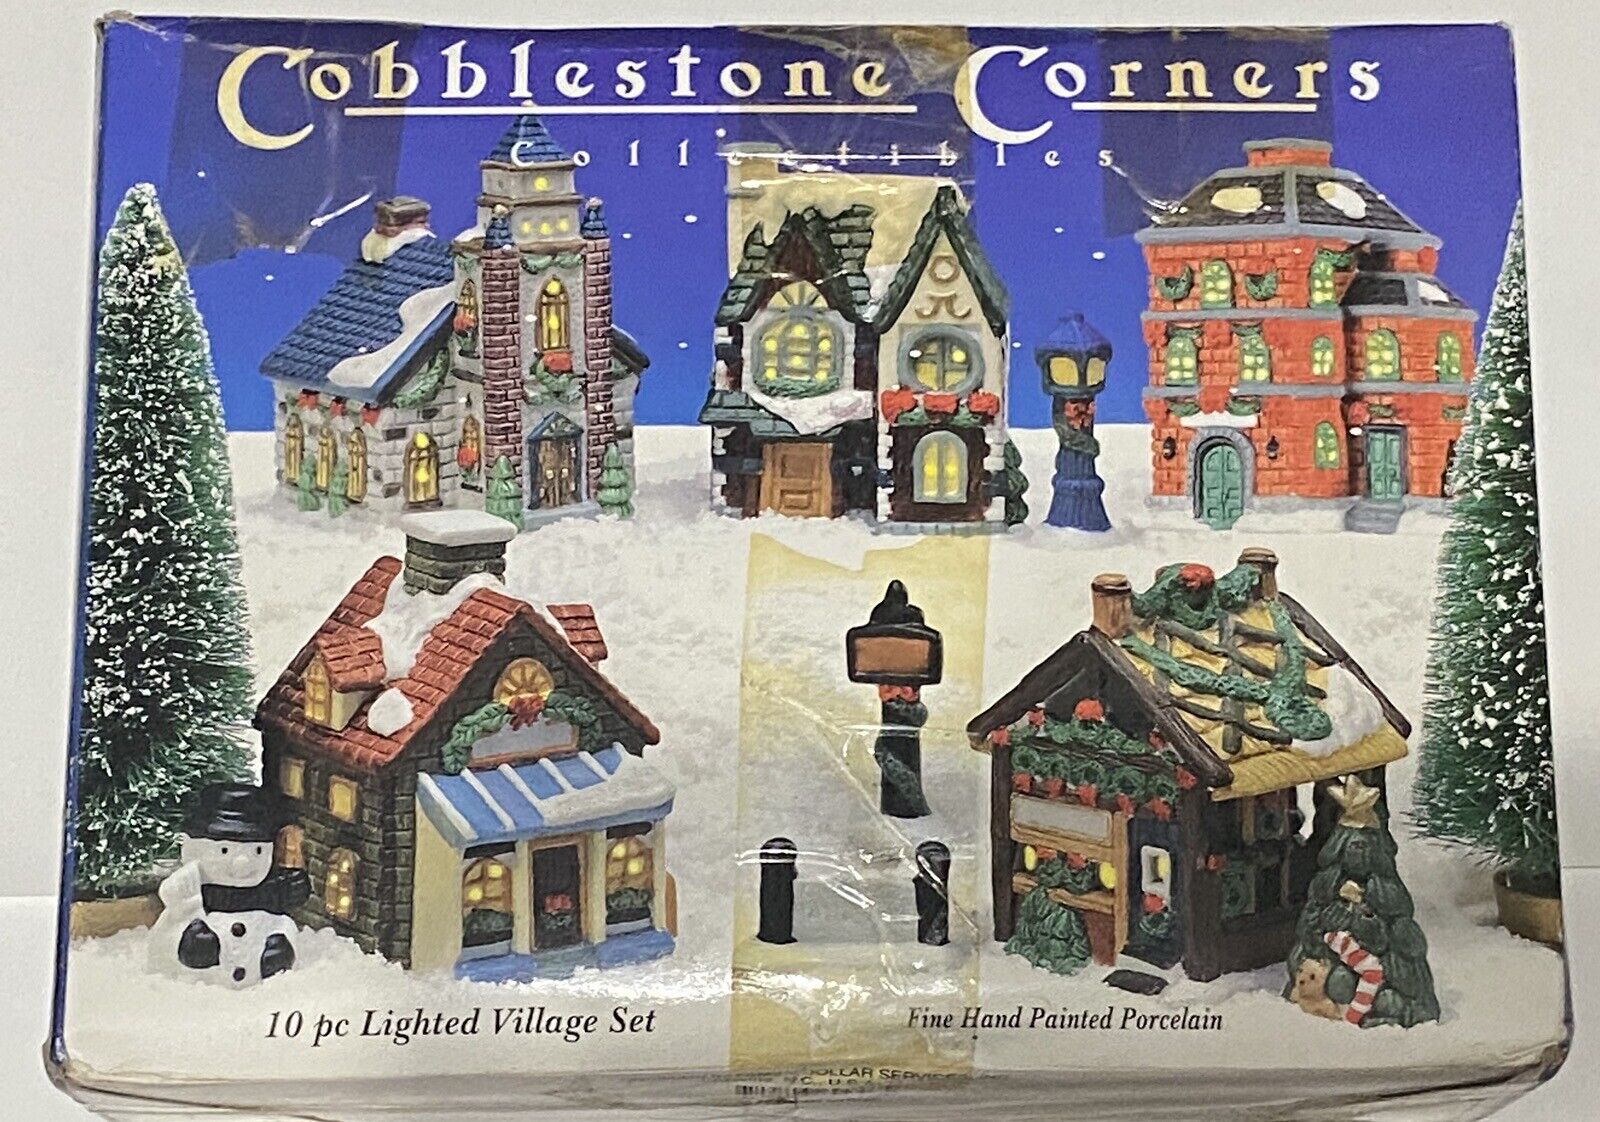 VTG 1991 Cobblestone Corners 10 PC. Lighted Village Set complete w/all 10 Pieces